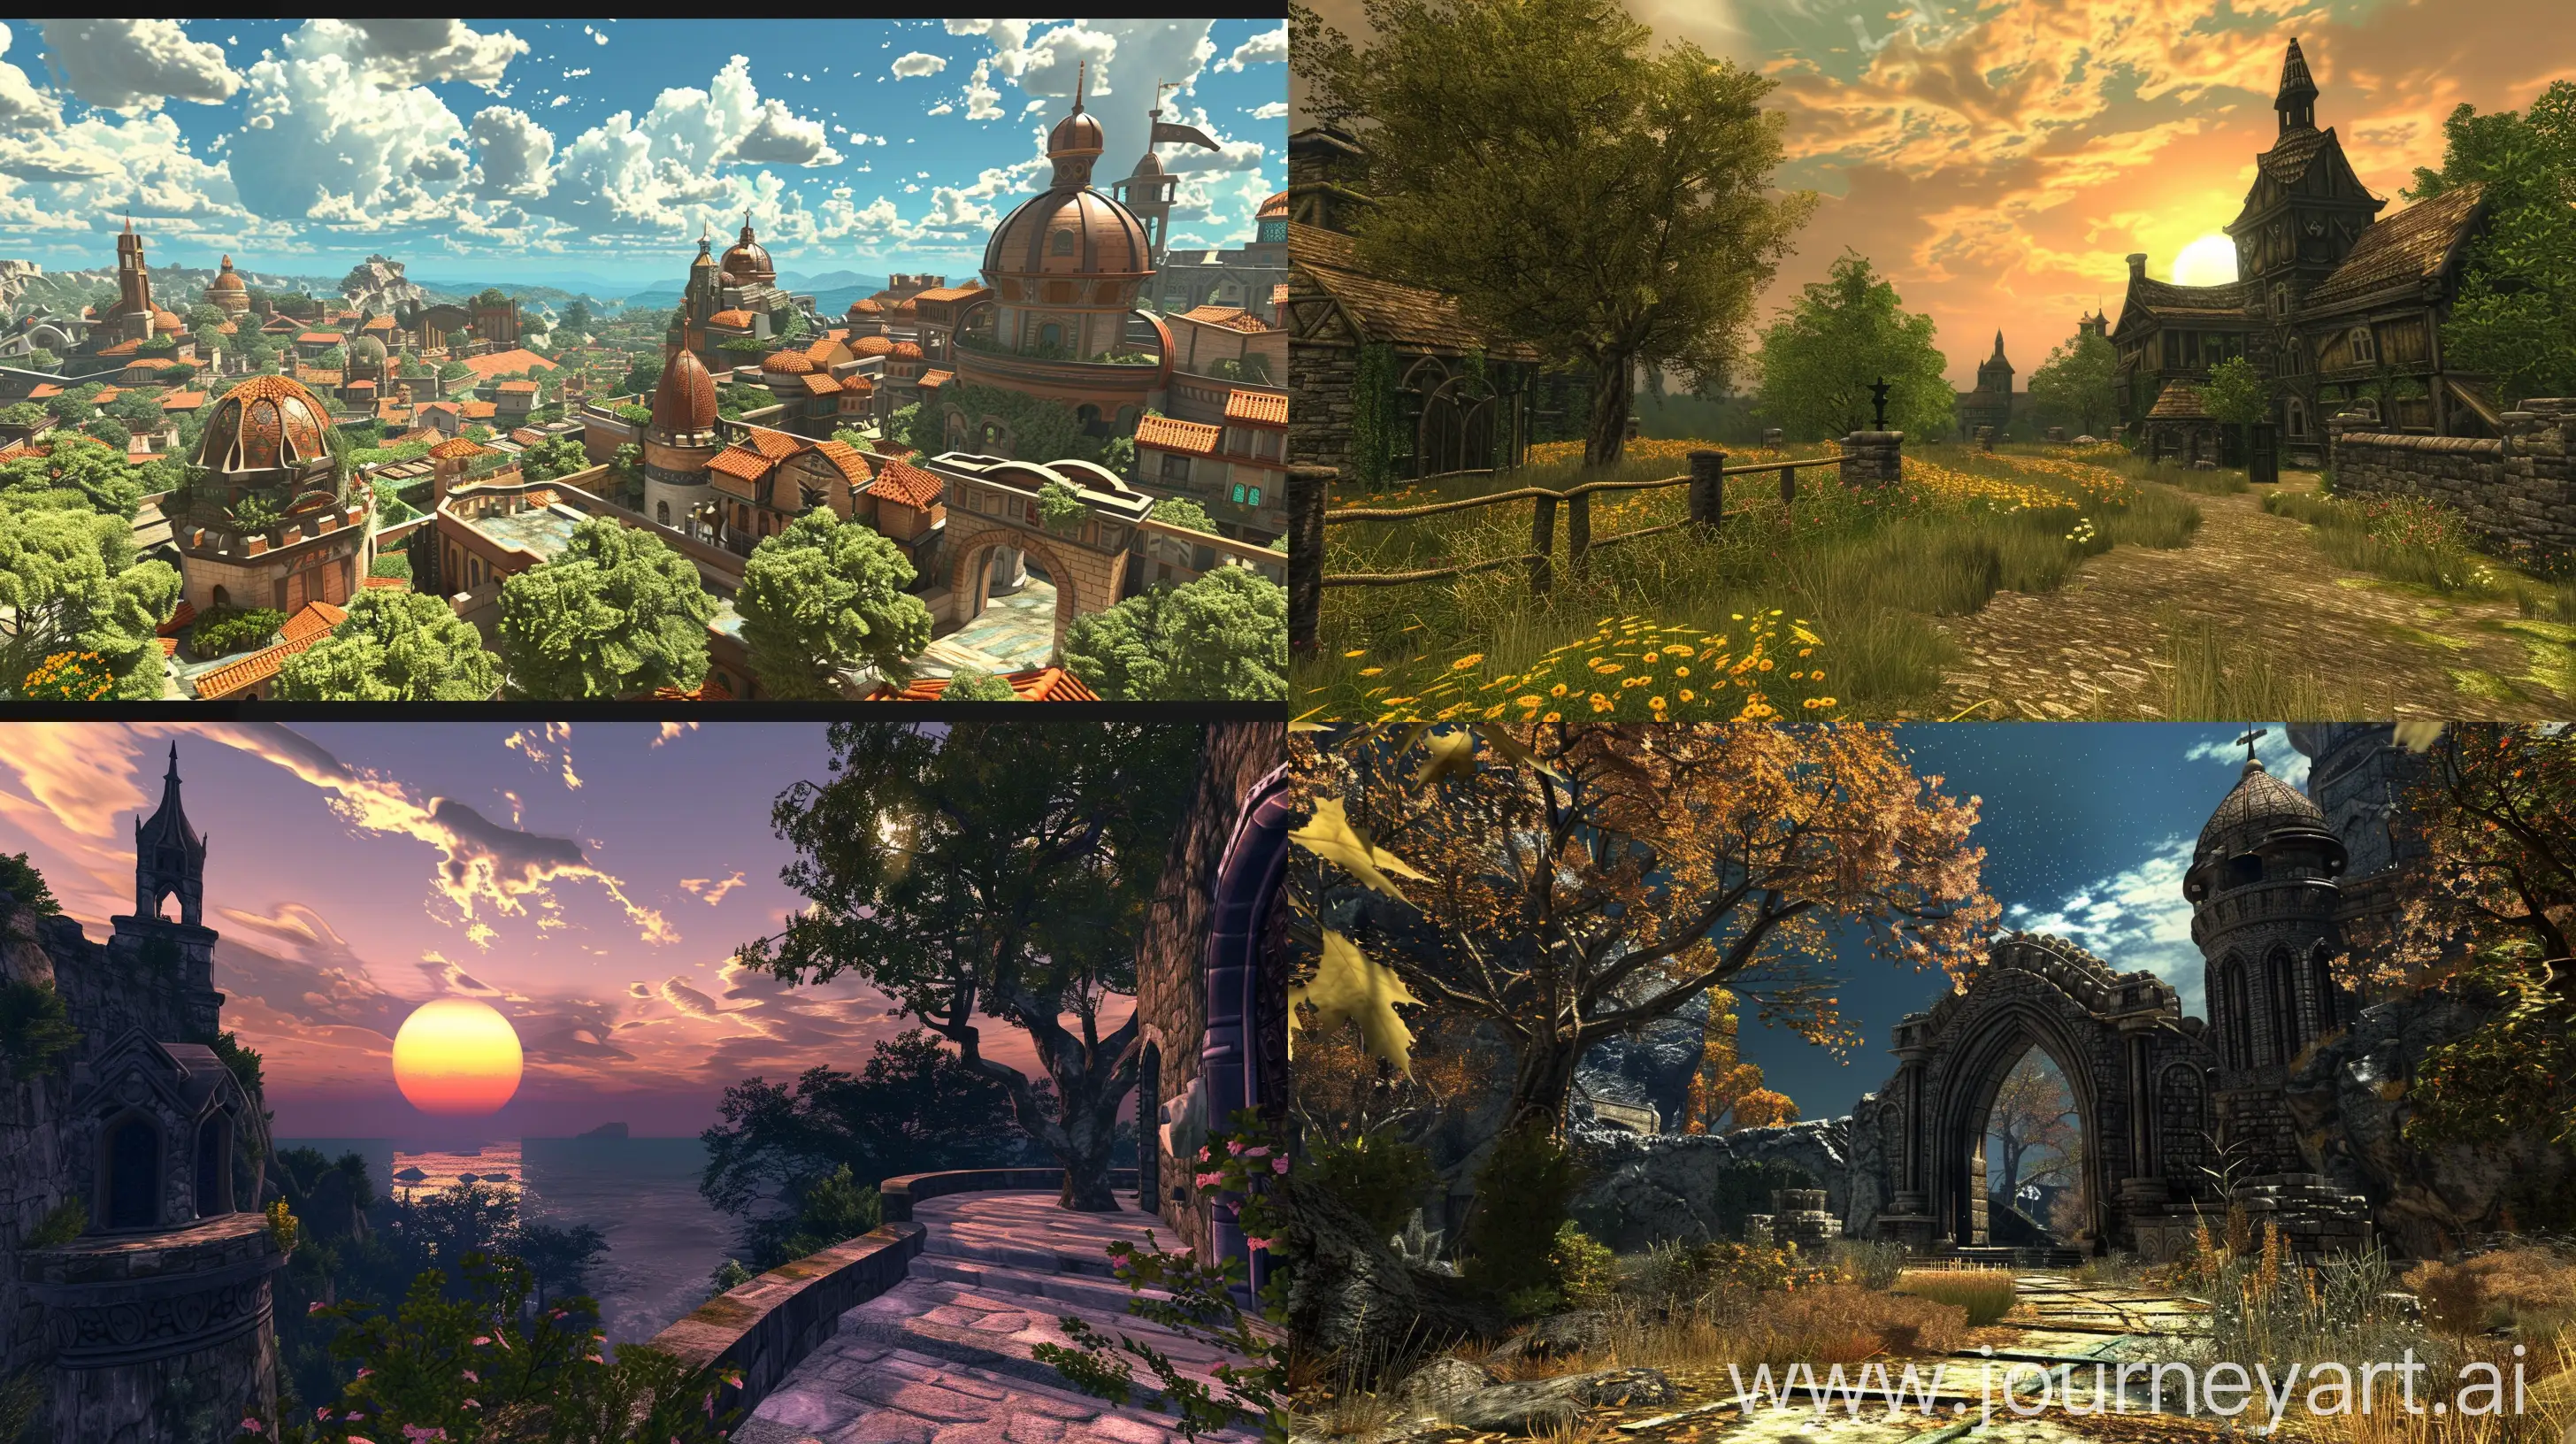 Virtual-Landscape-Exploration-Photorealistic-Screensaver-Inspired-by-Y2K-Era-MMORPG